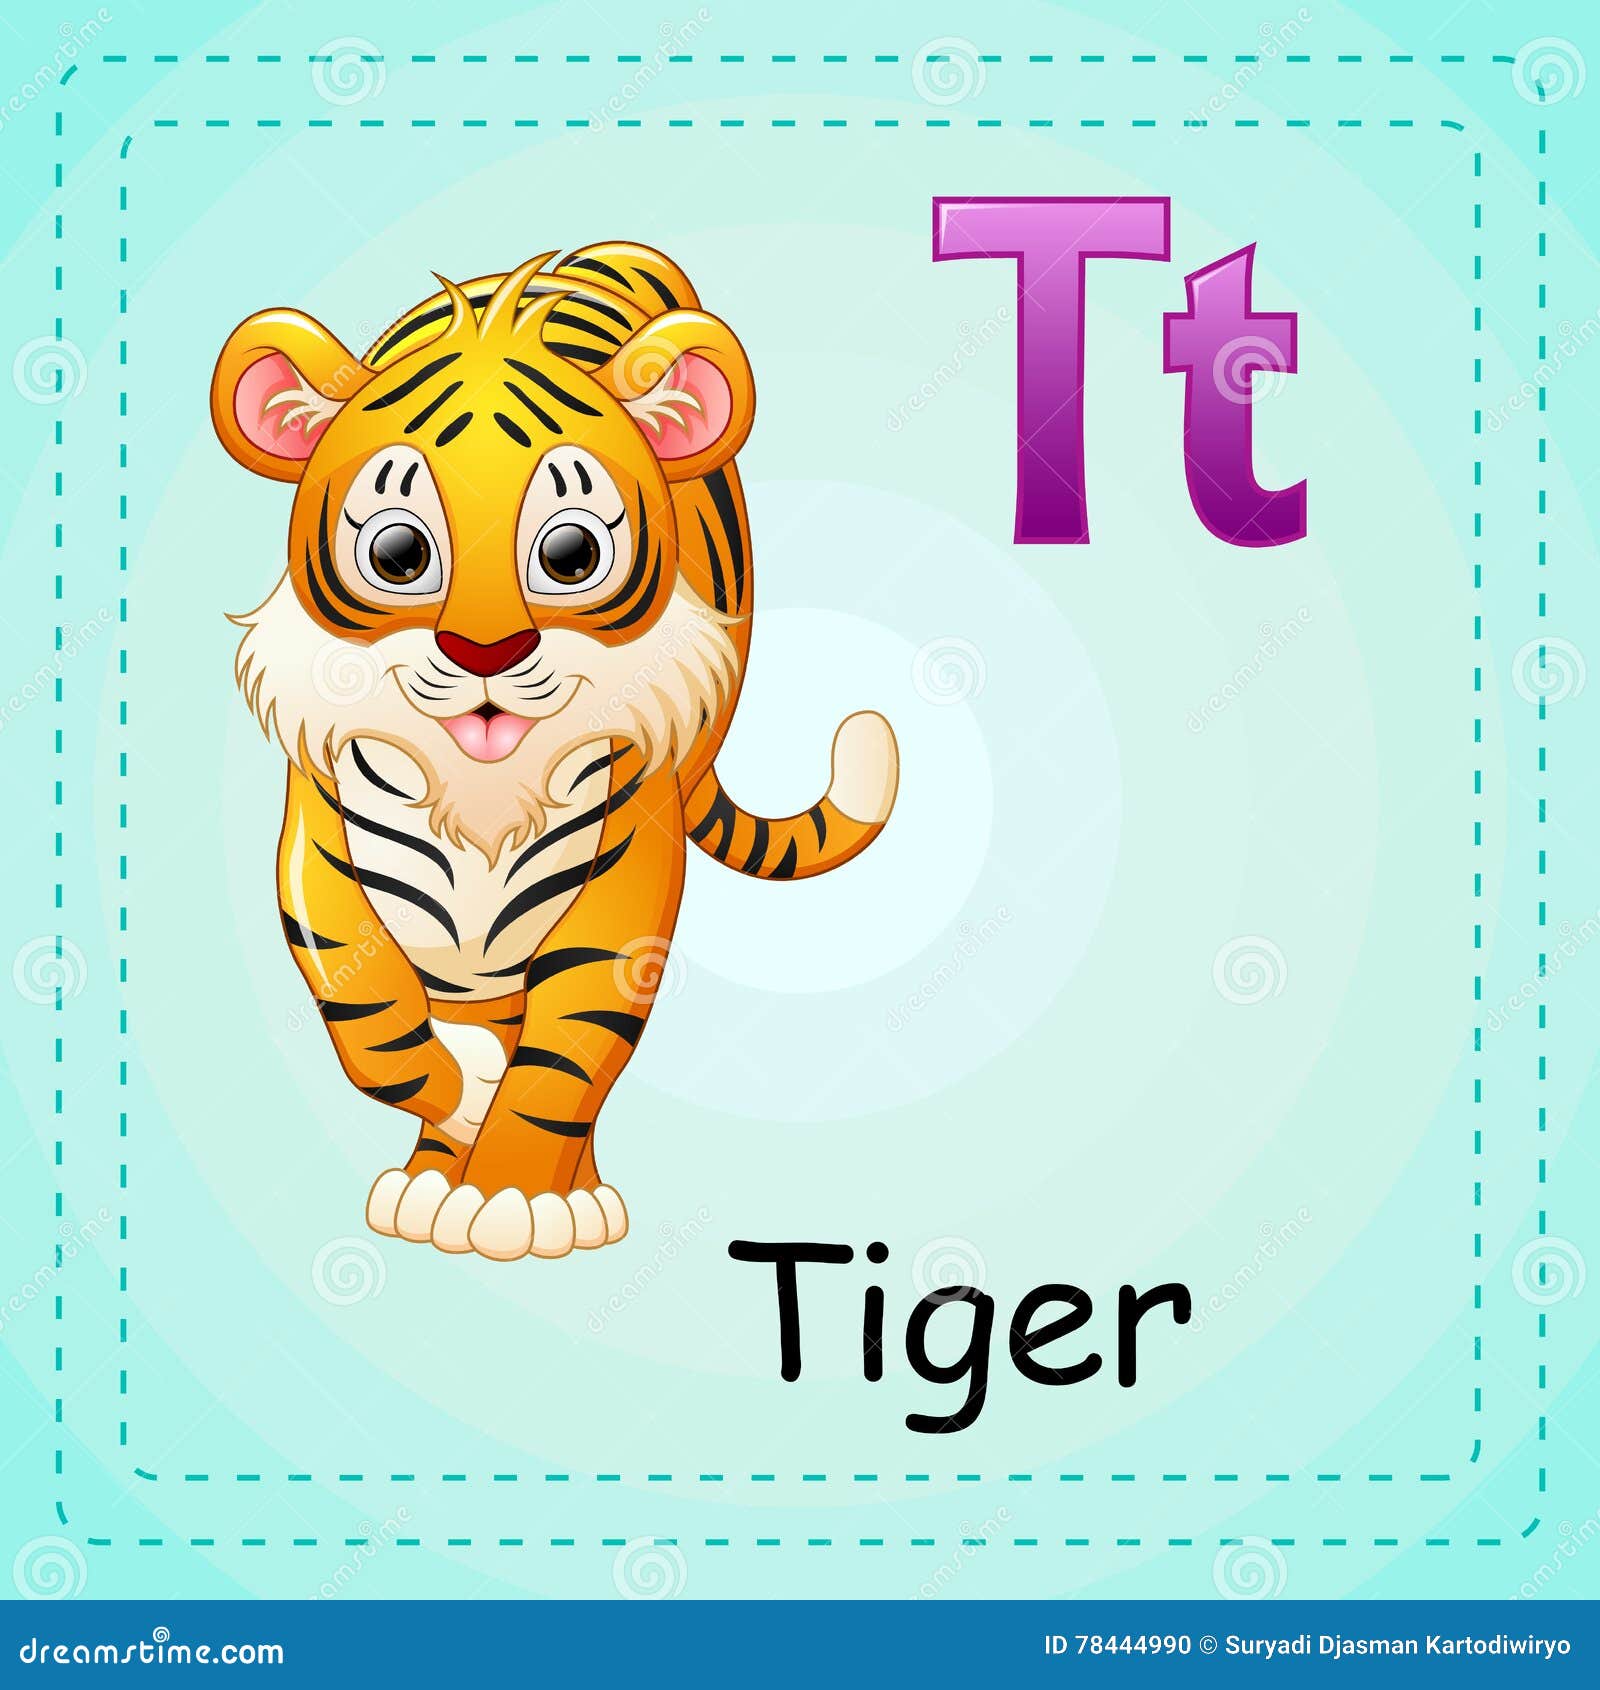 Карточка с тигром на английском языке. Карточки по английскому языку тигр для детей. Буква т тигр. Тигр карточка для детей.